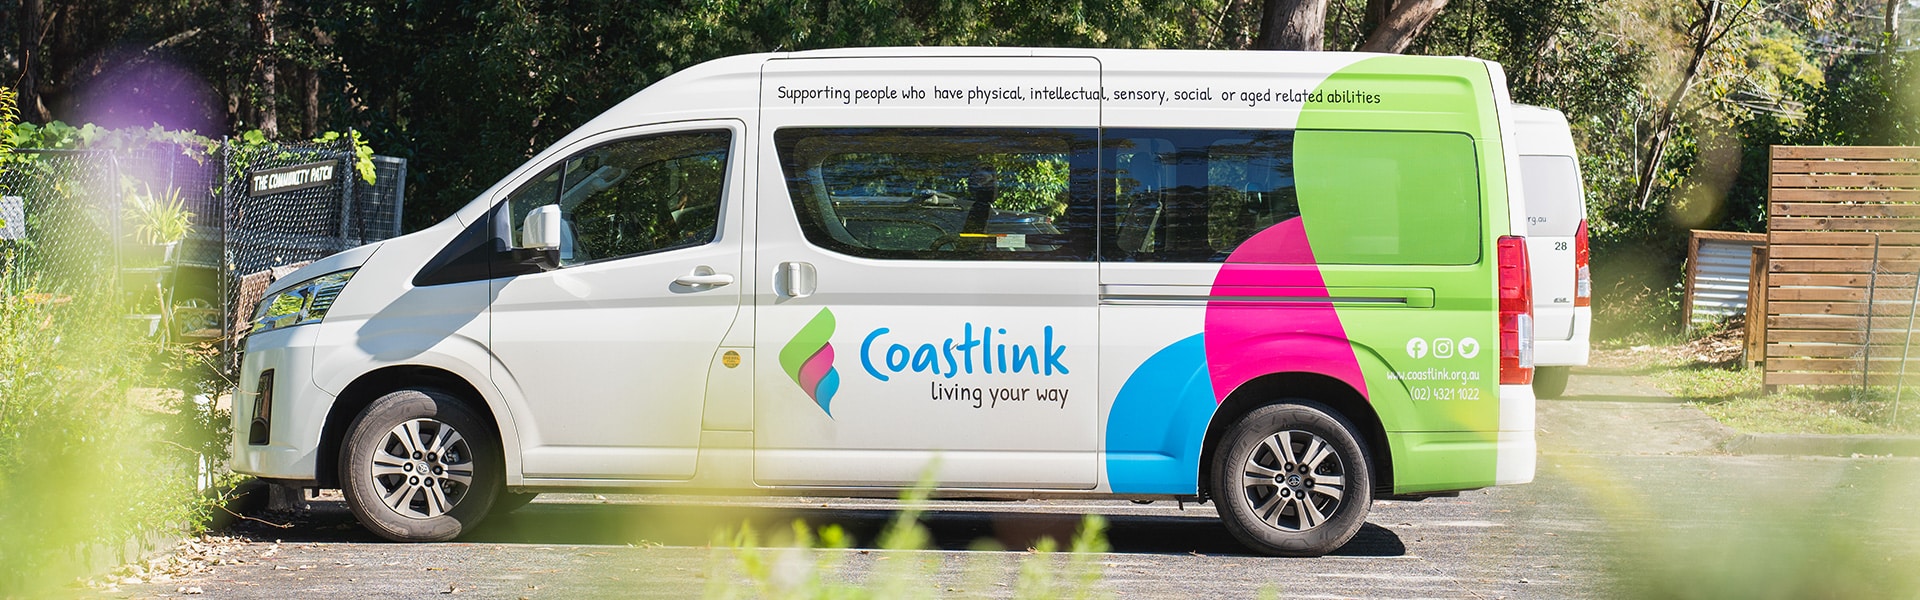 Coastlink transport minibus assisting with transport